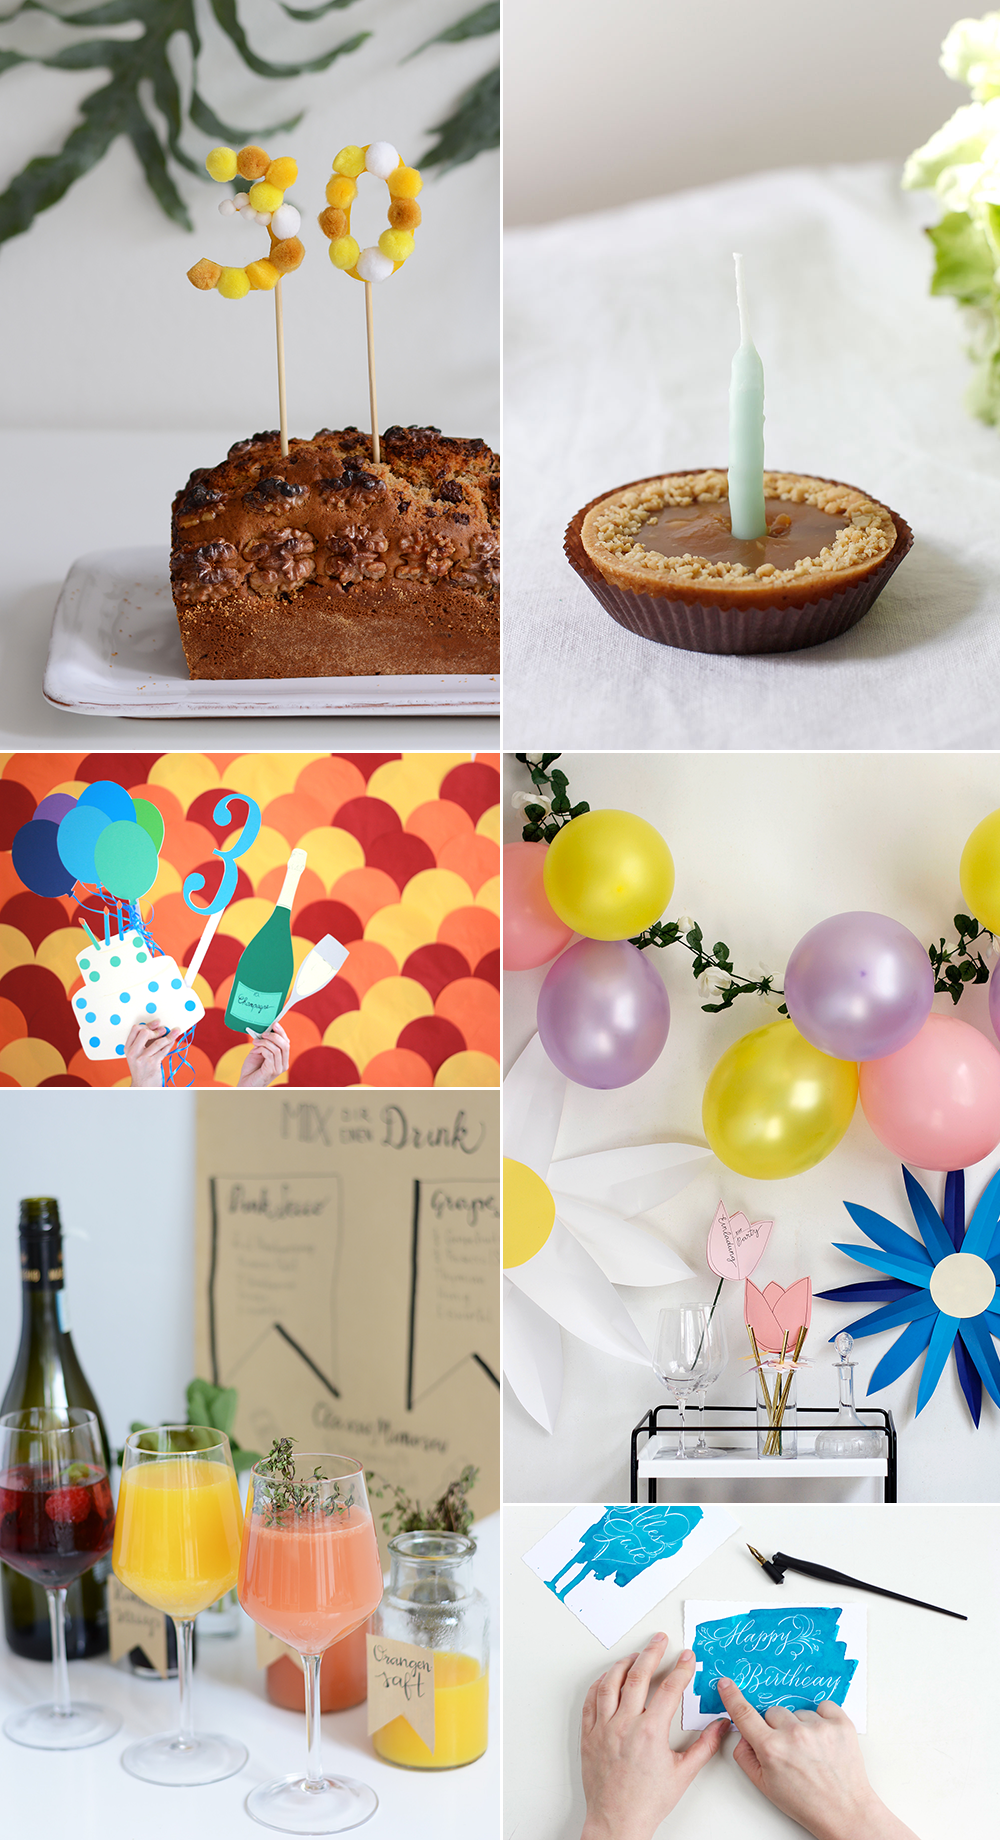 DIY-Ideen fürs Geburtstagsfest | we love handmade